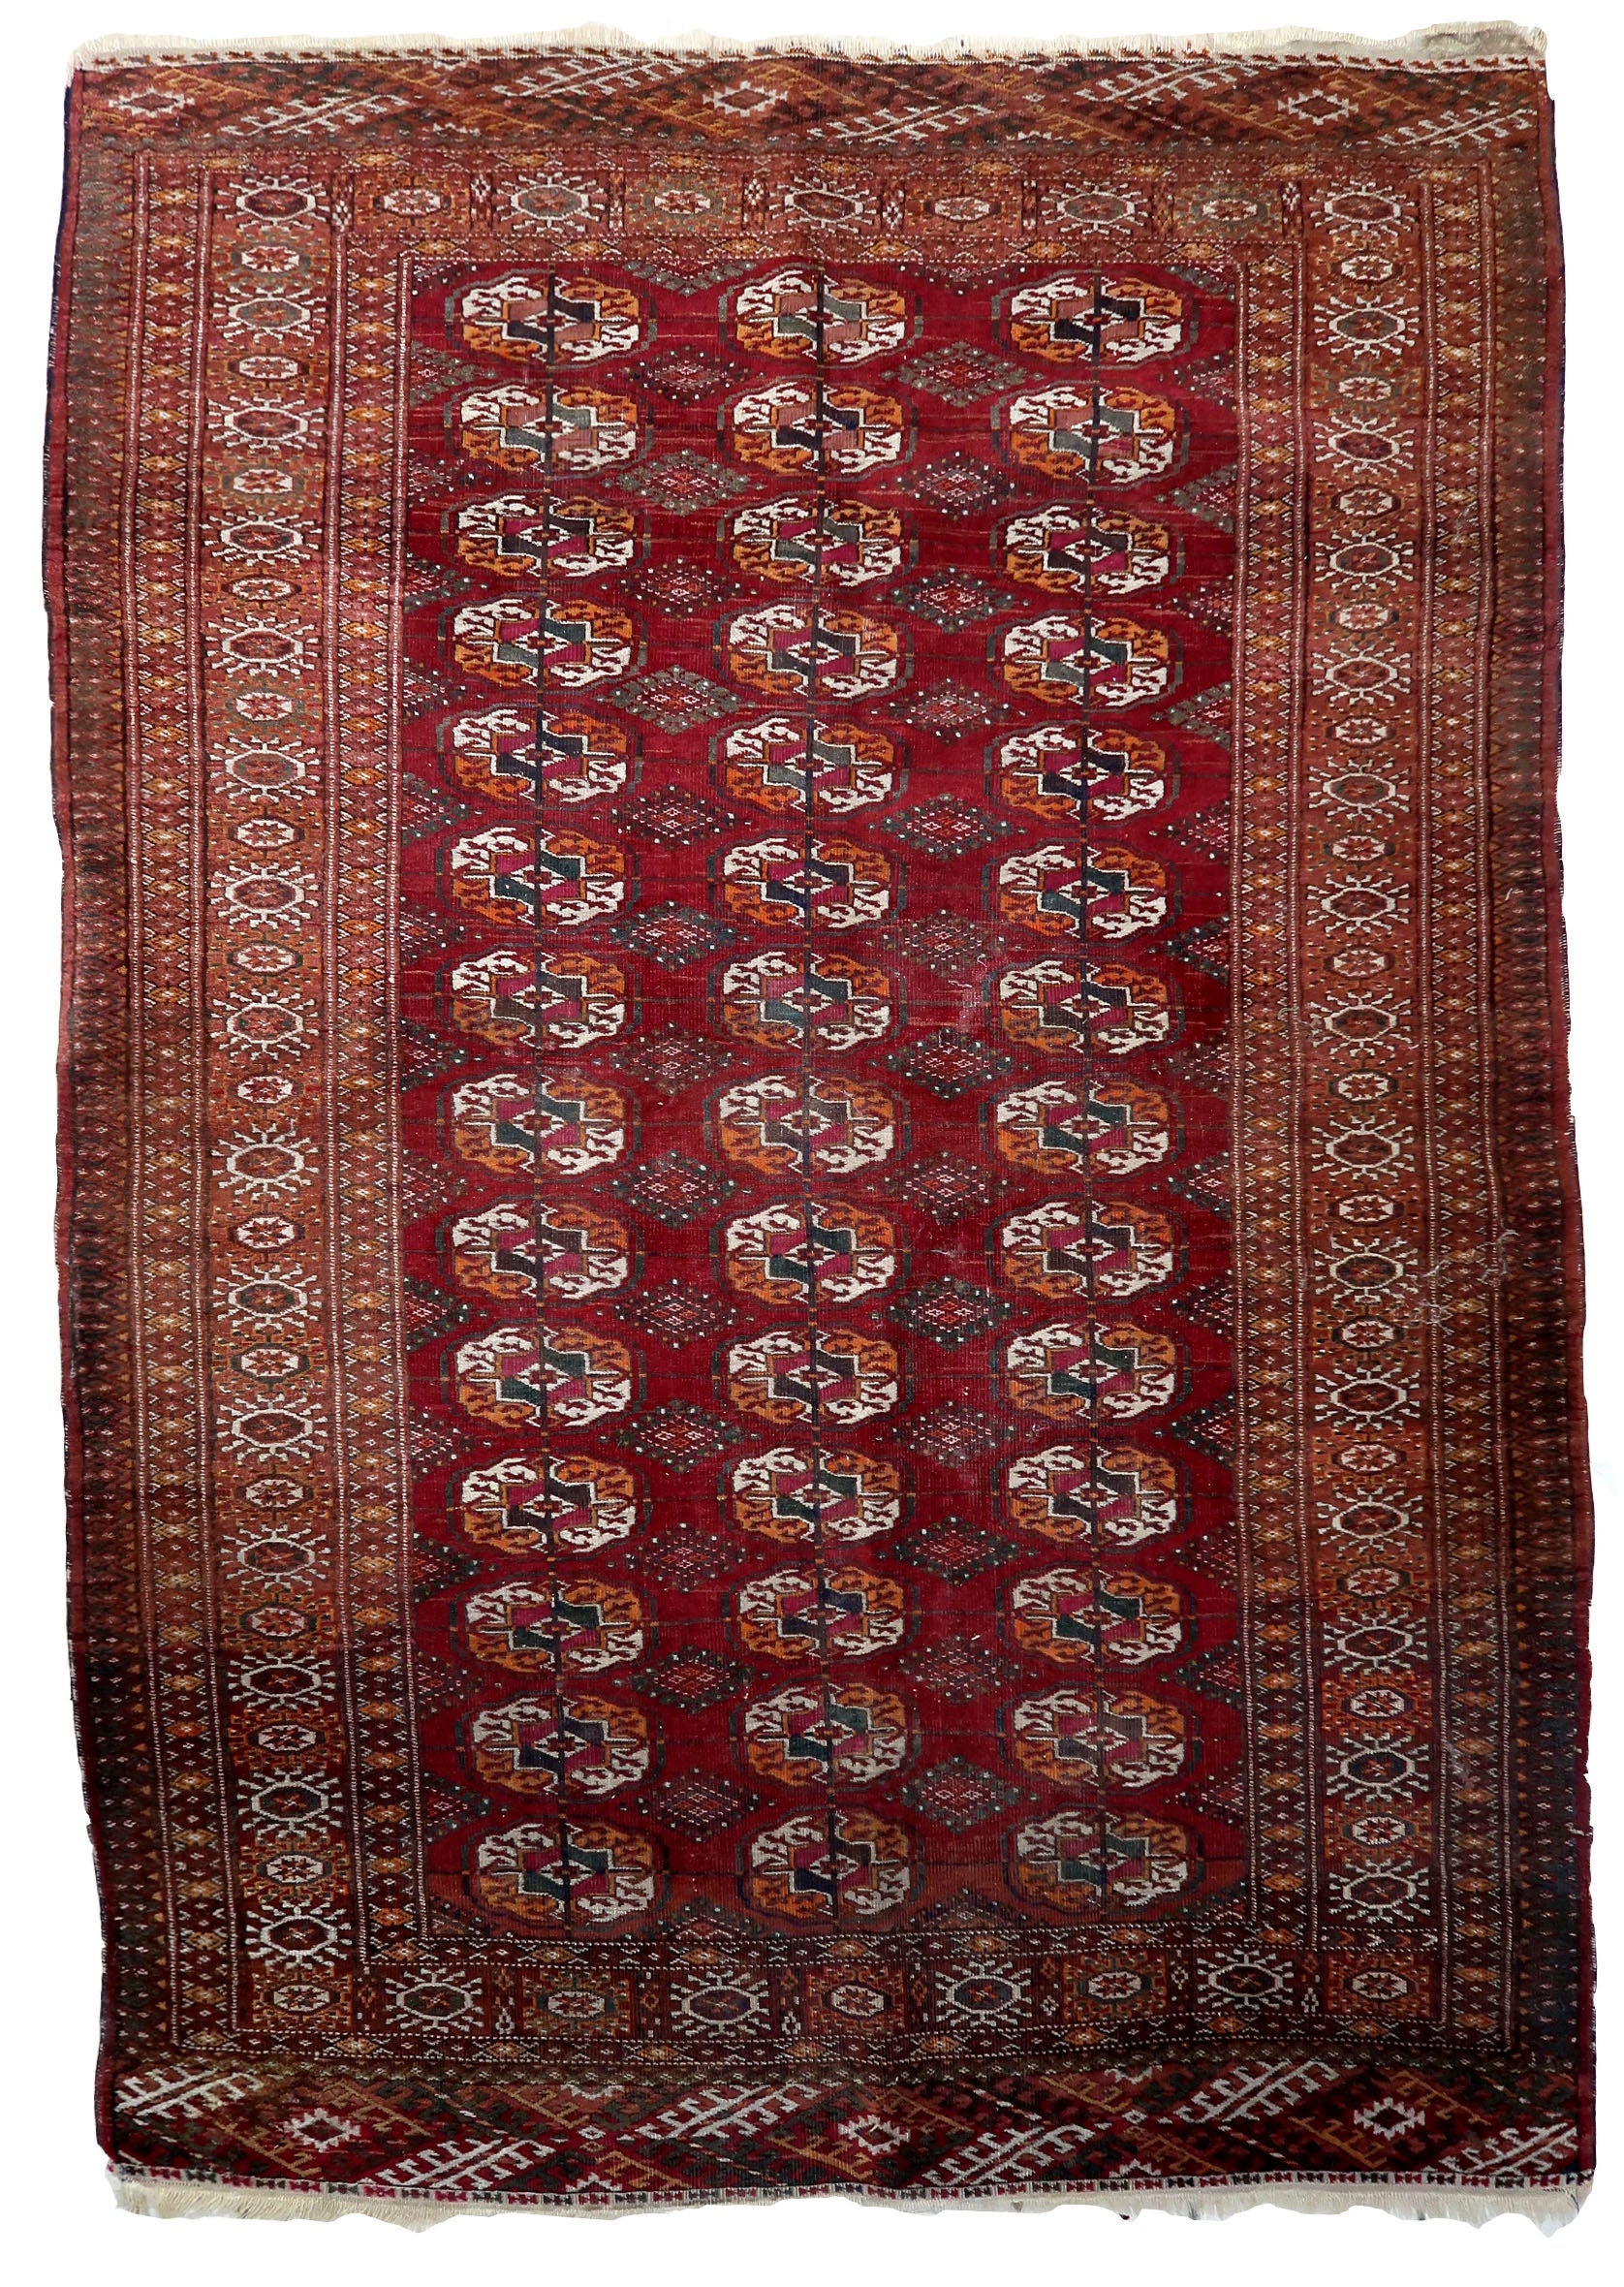 "Handmade Vintage Uzbek Bukhara Rug - Front View